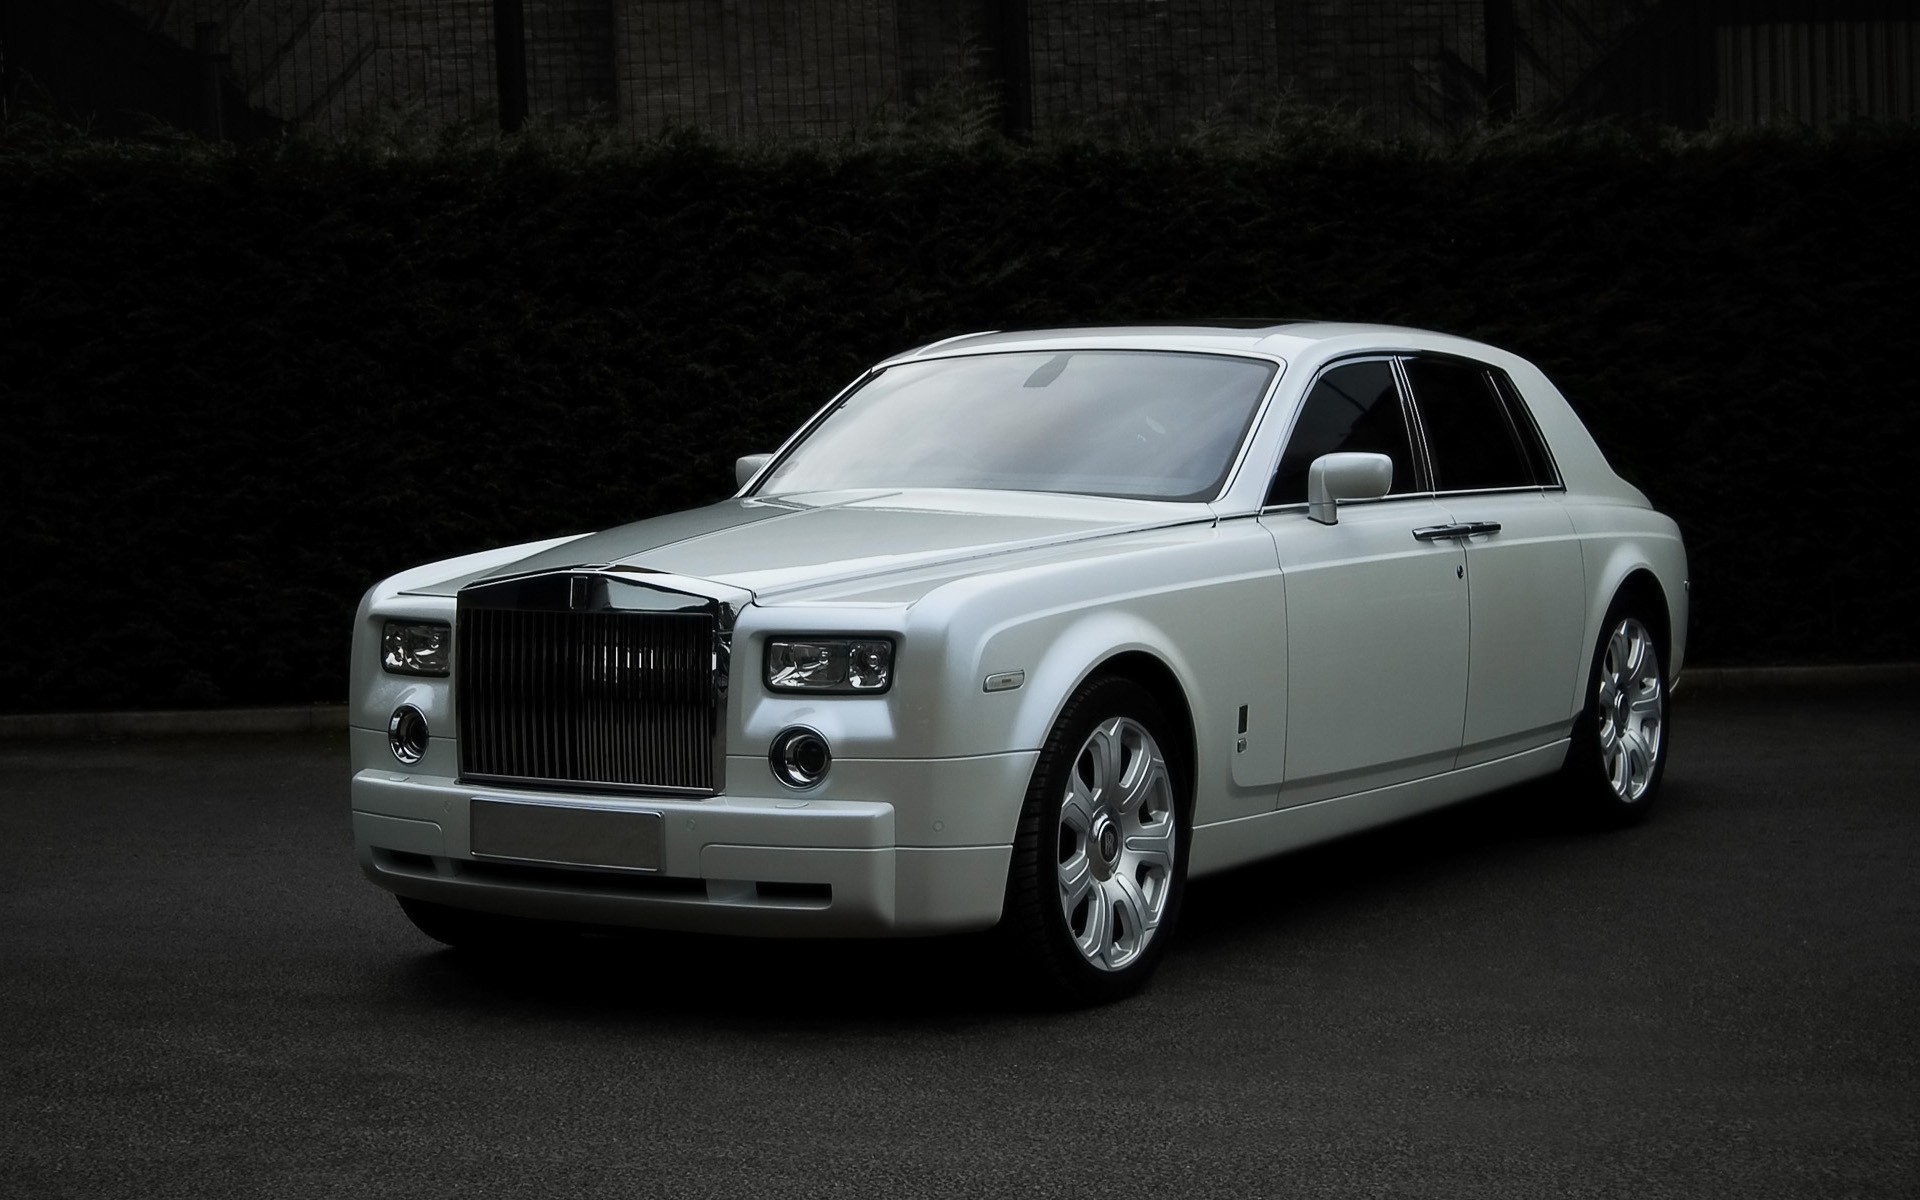 Белый роллс. Роллс Ройс 2009. Rolls Royce Phantom. Роллс Ройс Phantom белый. Роллс Ройс Фантом 2009 белый.